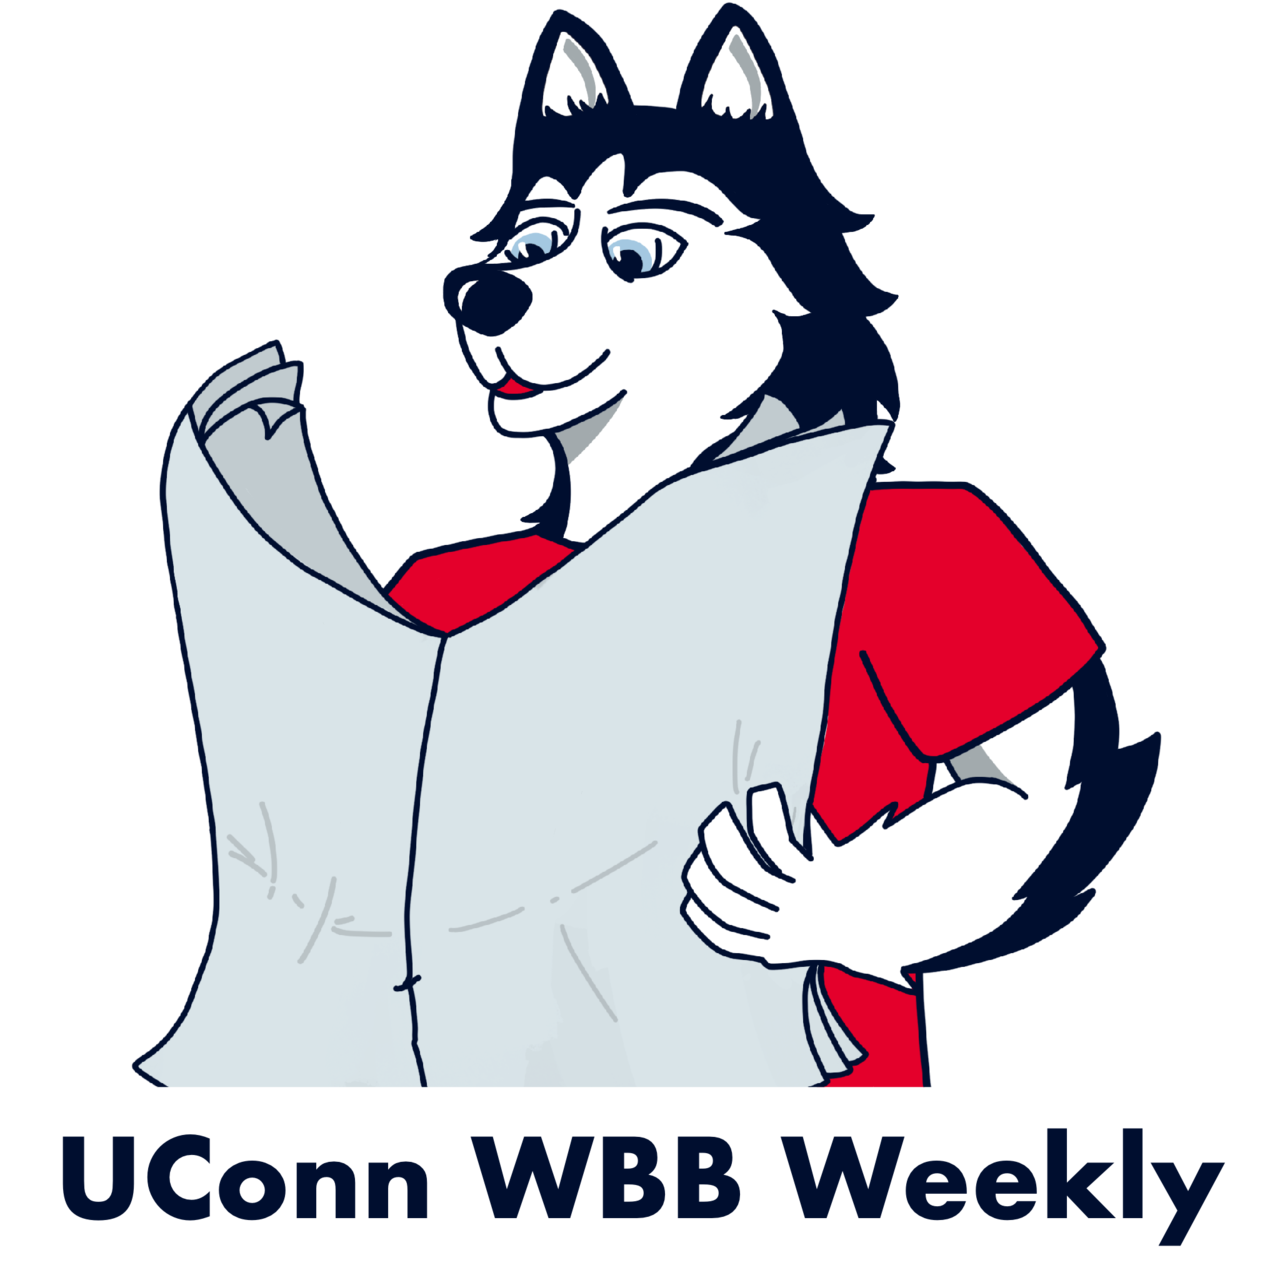 Artwork for UConn WBB Weekly